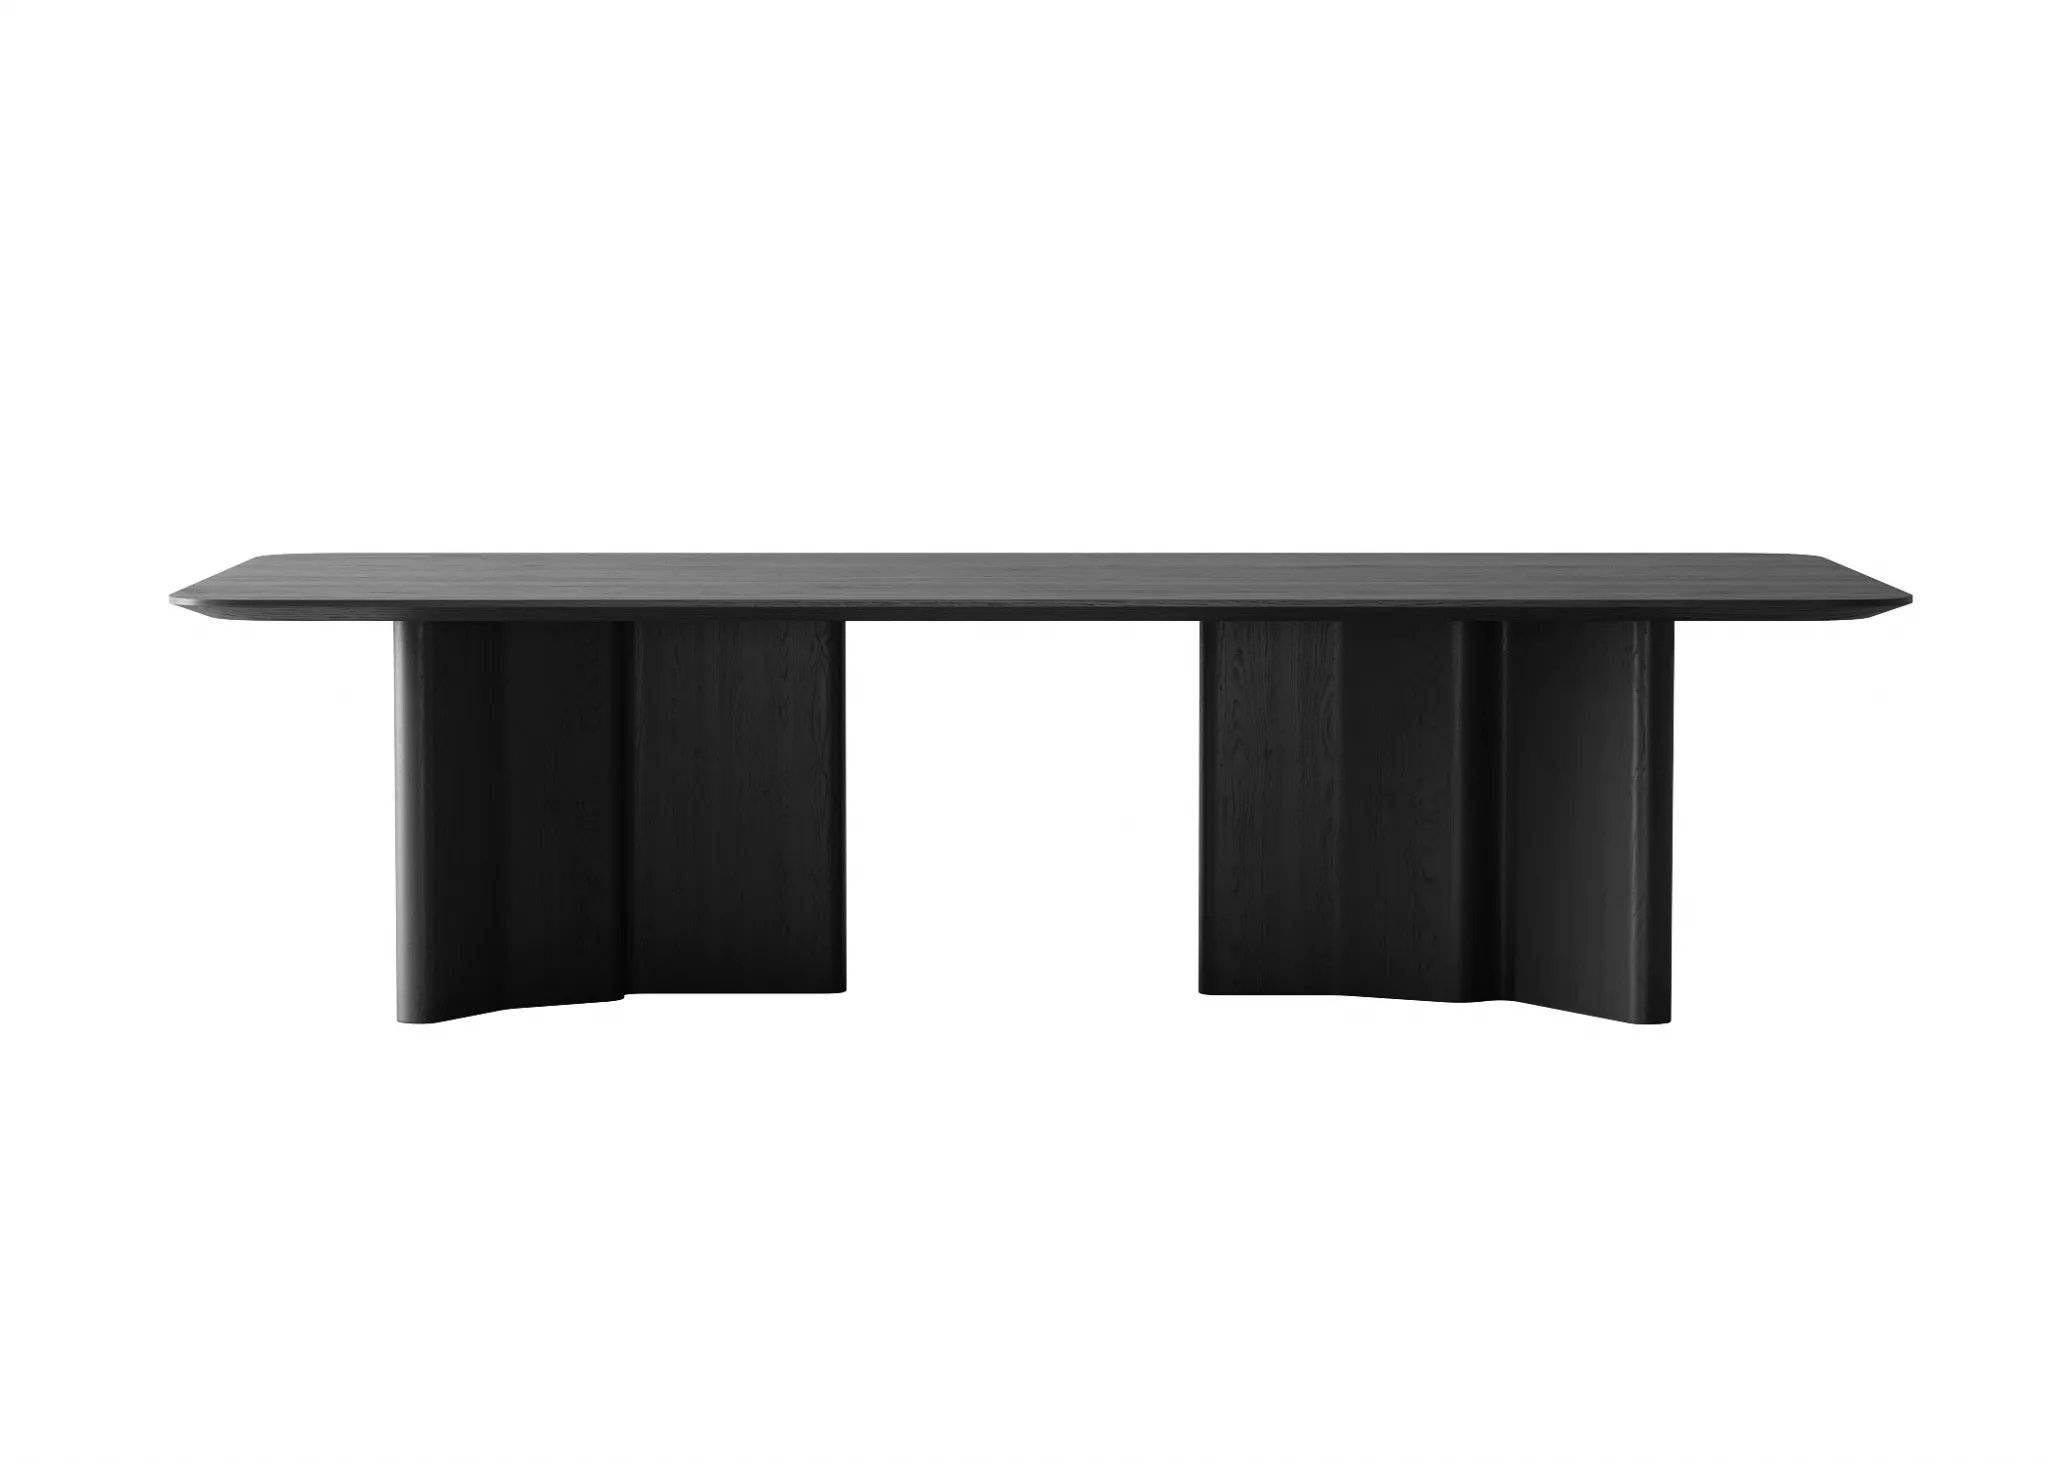 FURNITURE 3D MODELS – TABLES – 0194